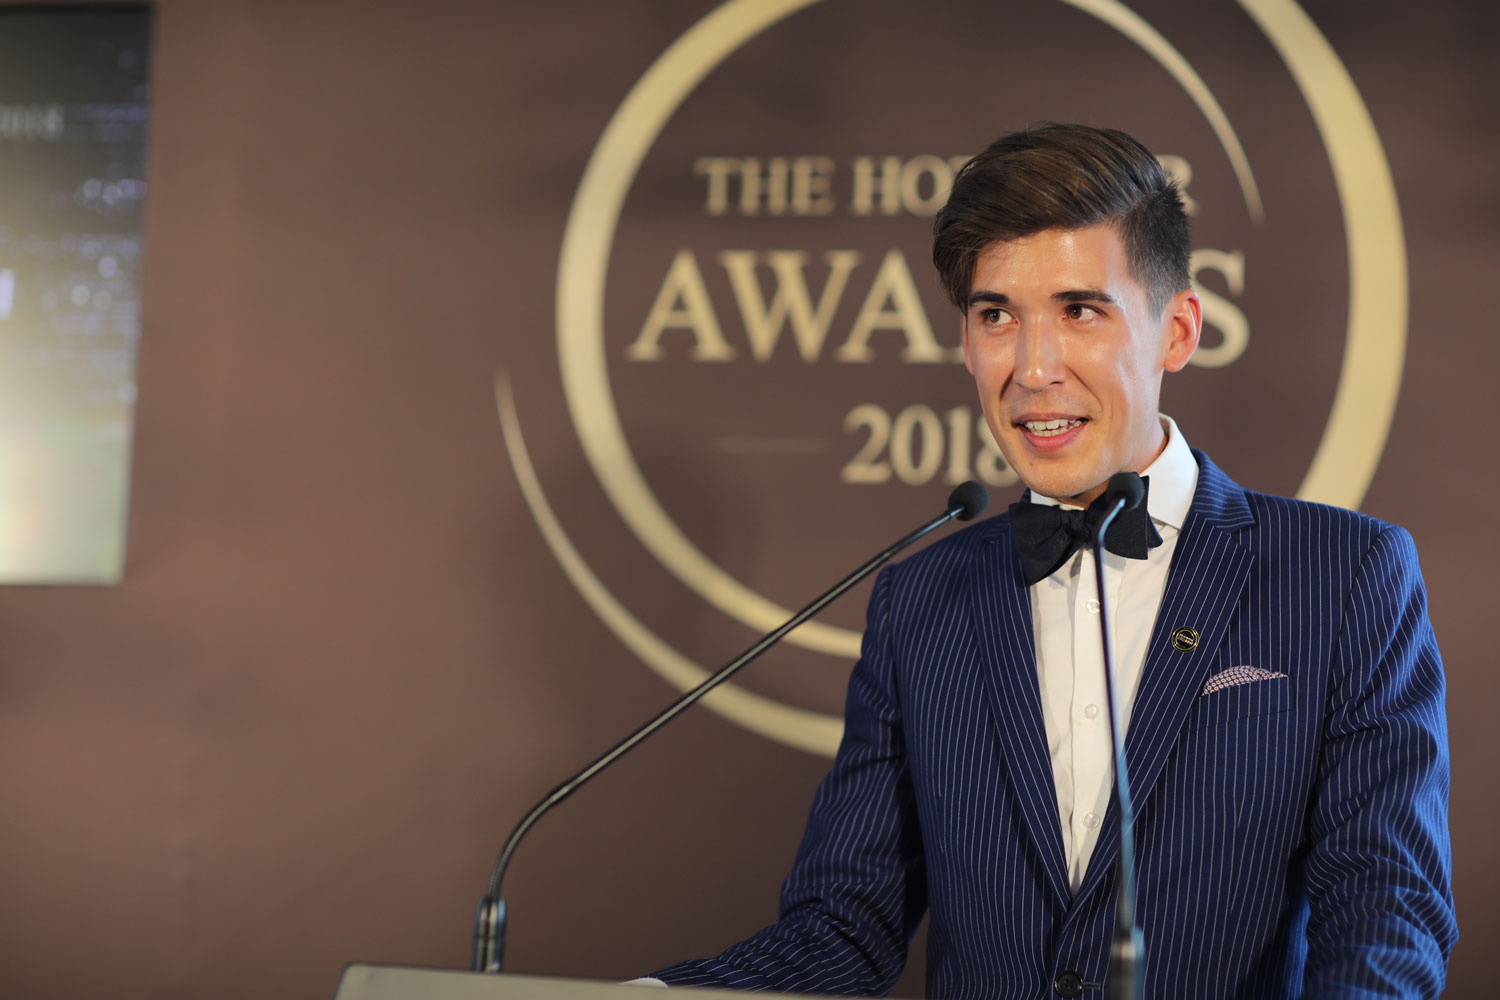 Simon Hansson Yu, Managing Director of The Hotelier Awards